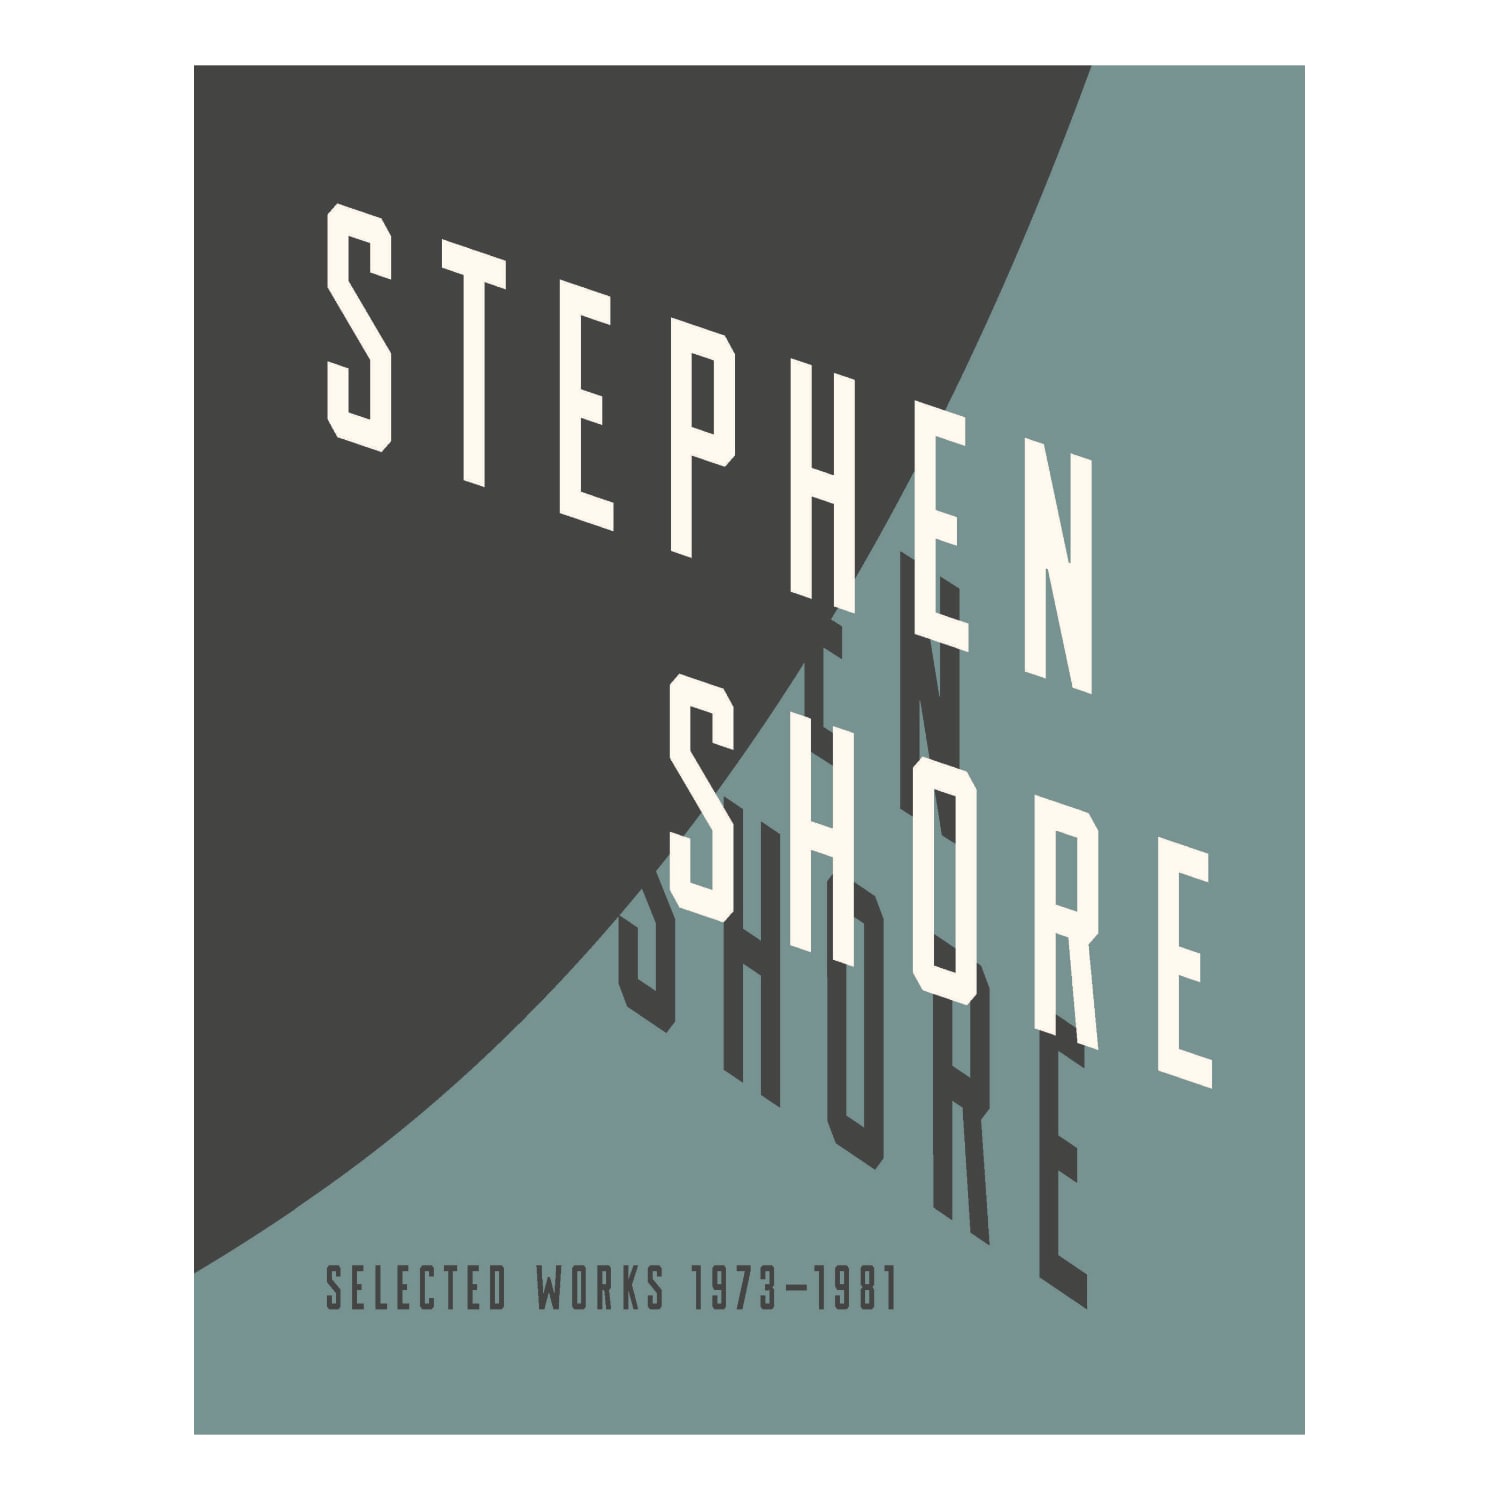 TThumbnail image for Stephen Shore - Selected Works 1973-1981